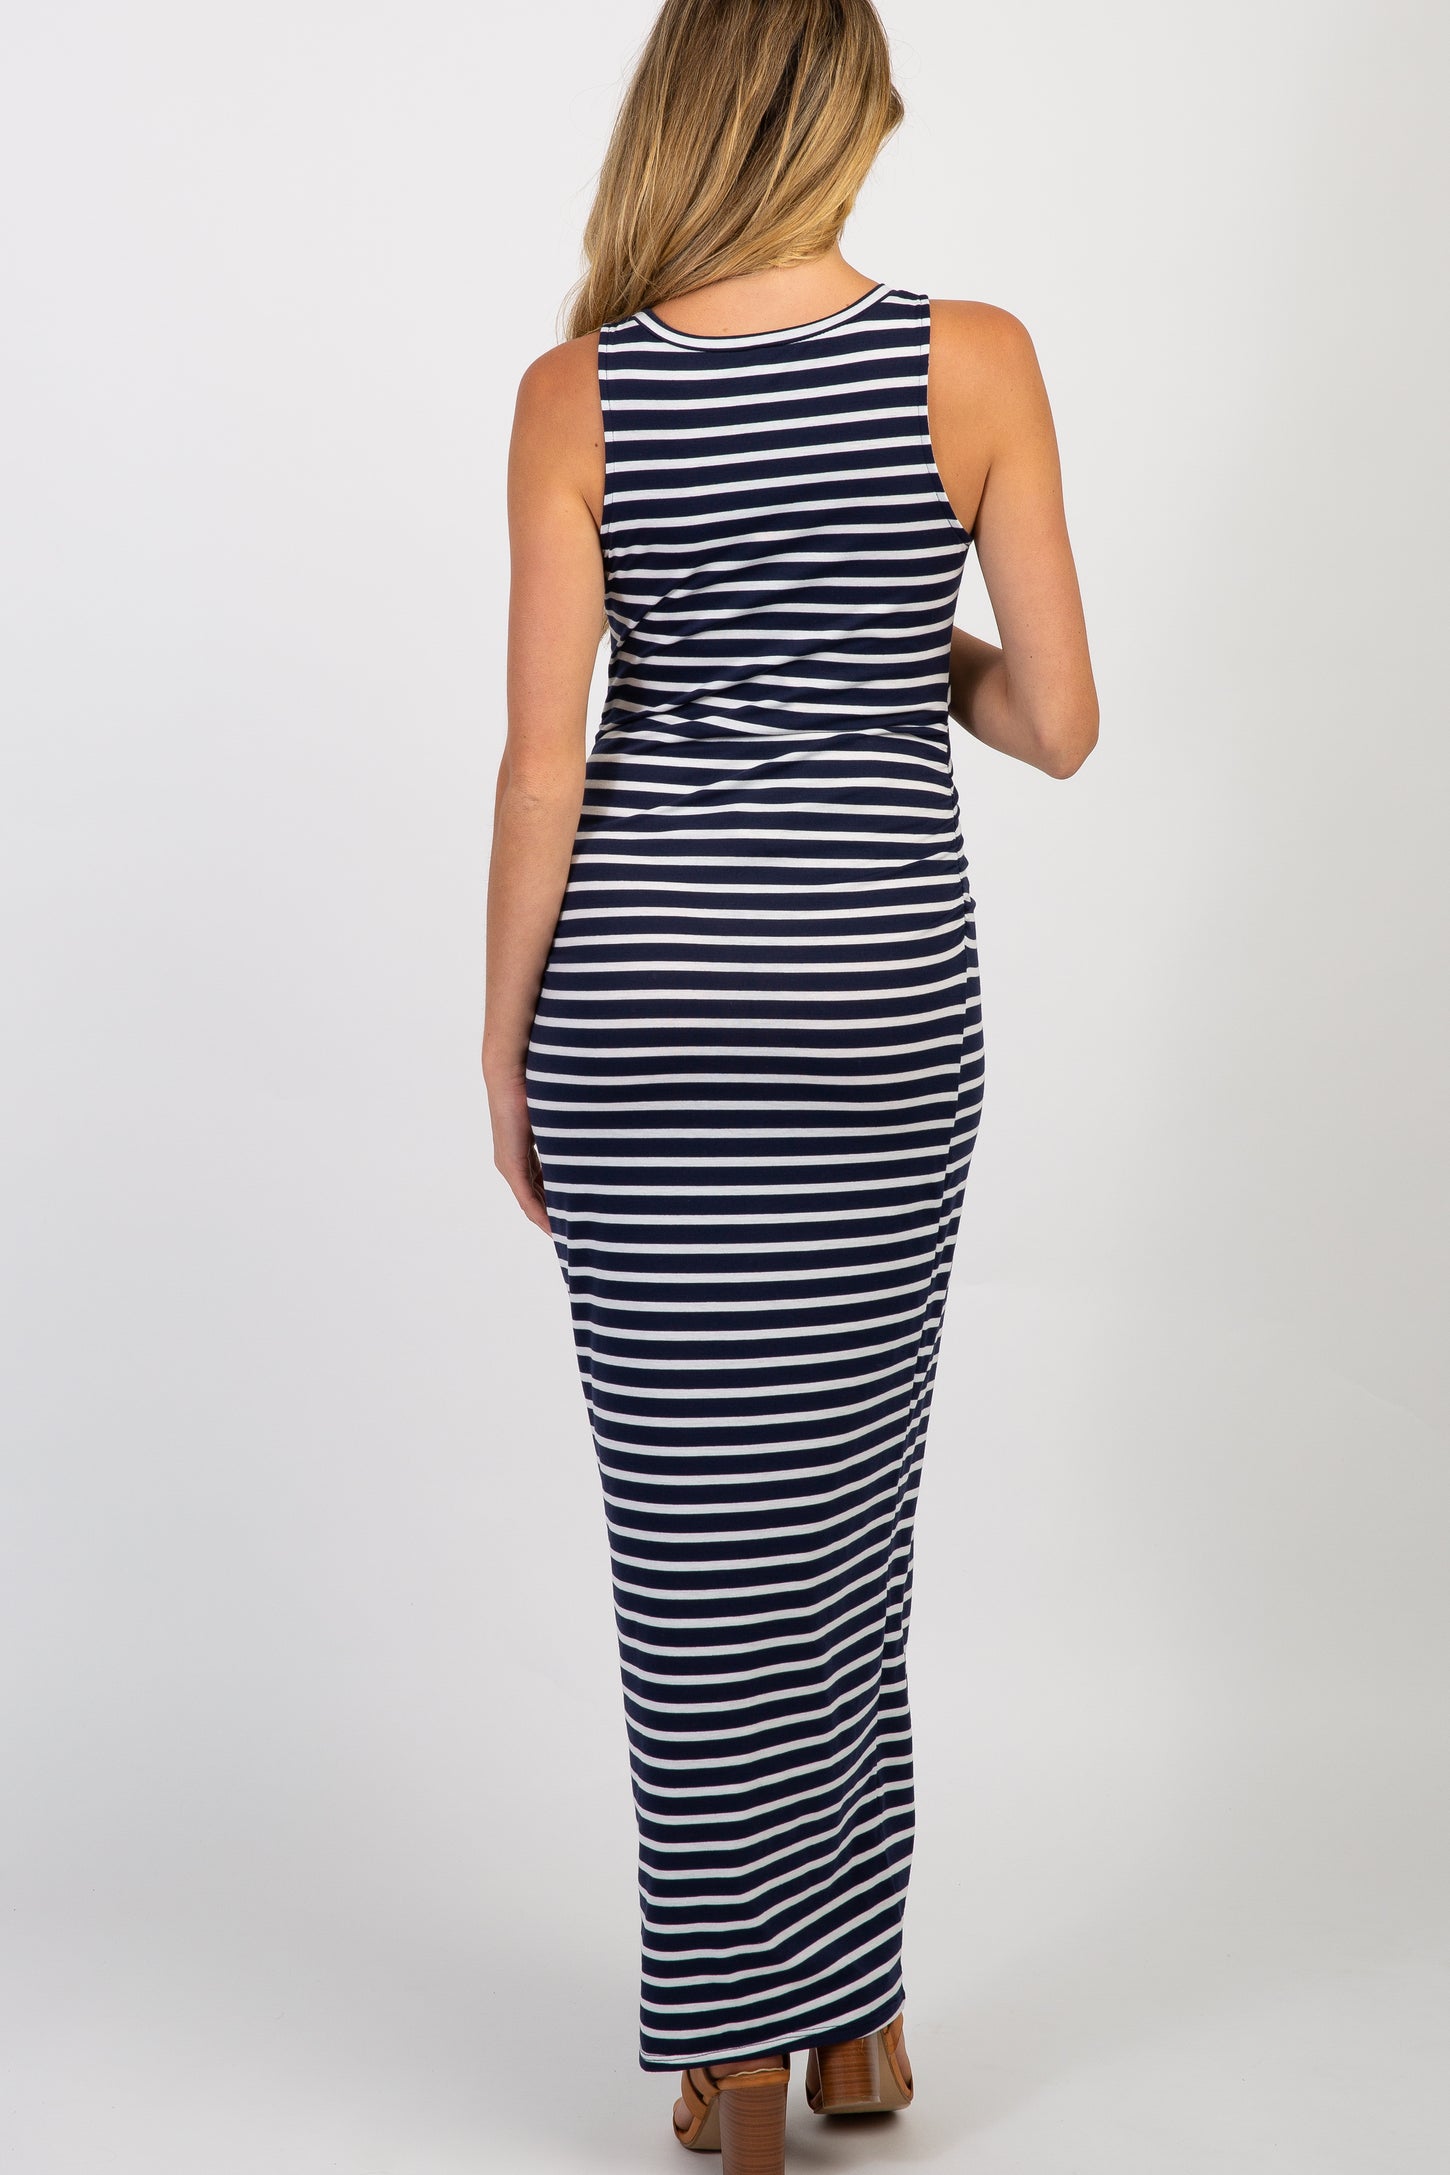 PinkBlush Navy Blue Striped Sleeveless Fitted Maternity Maxi Dress